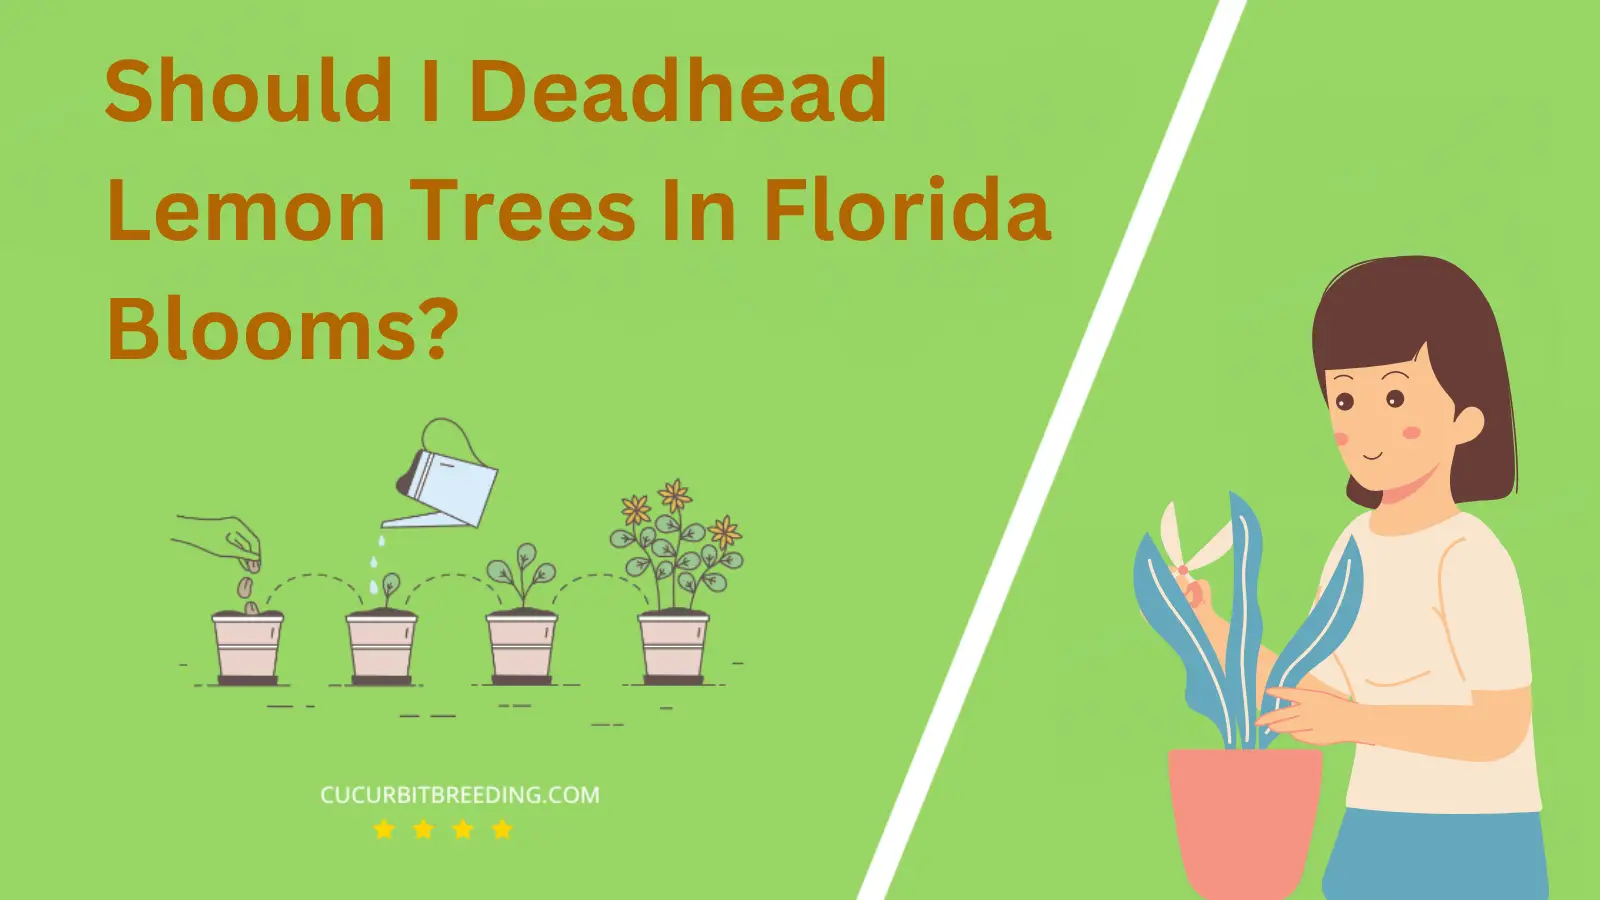 Should I Deadhead Lemon Trees In Florida Blooms?